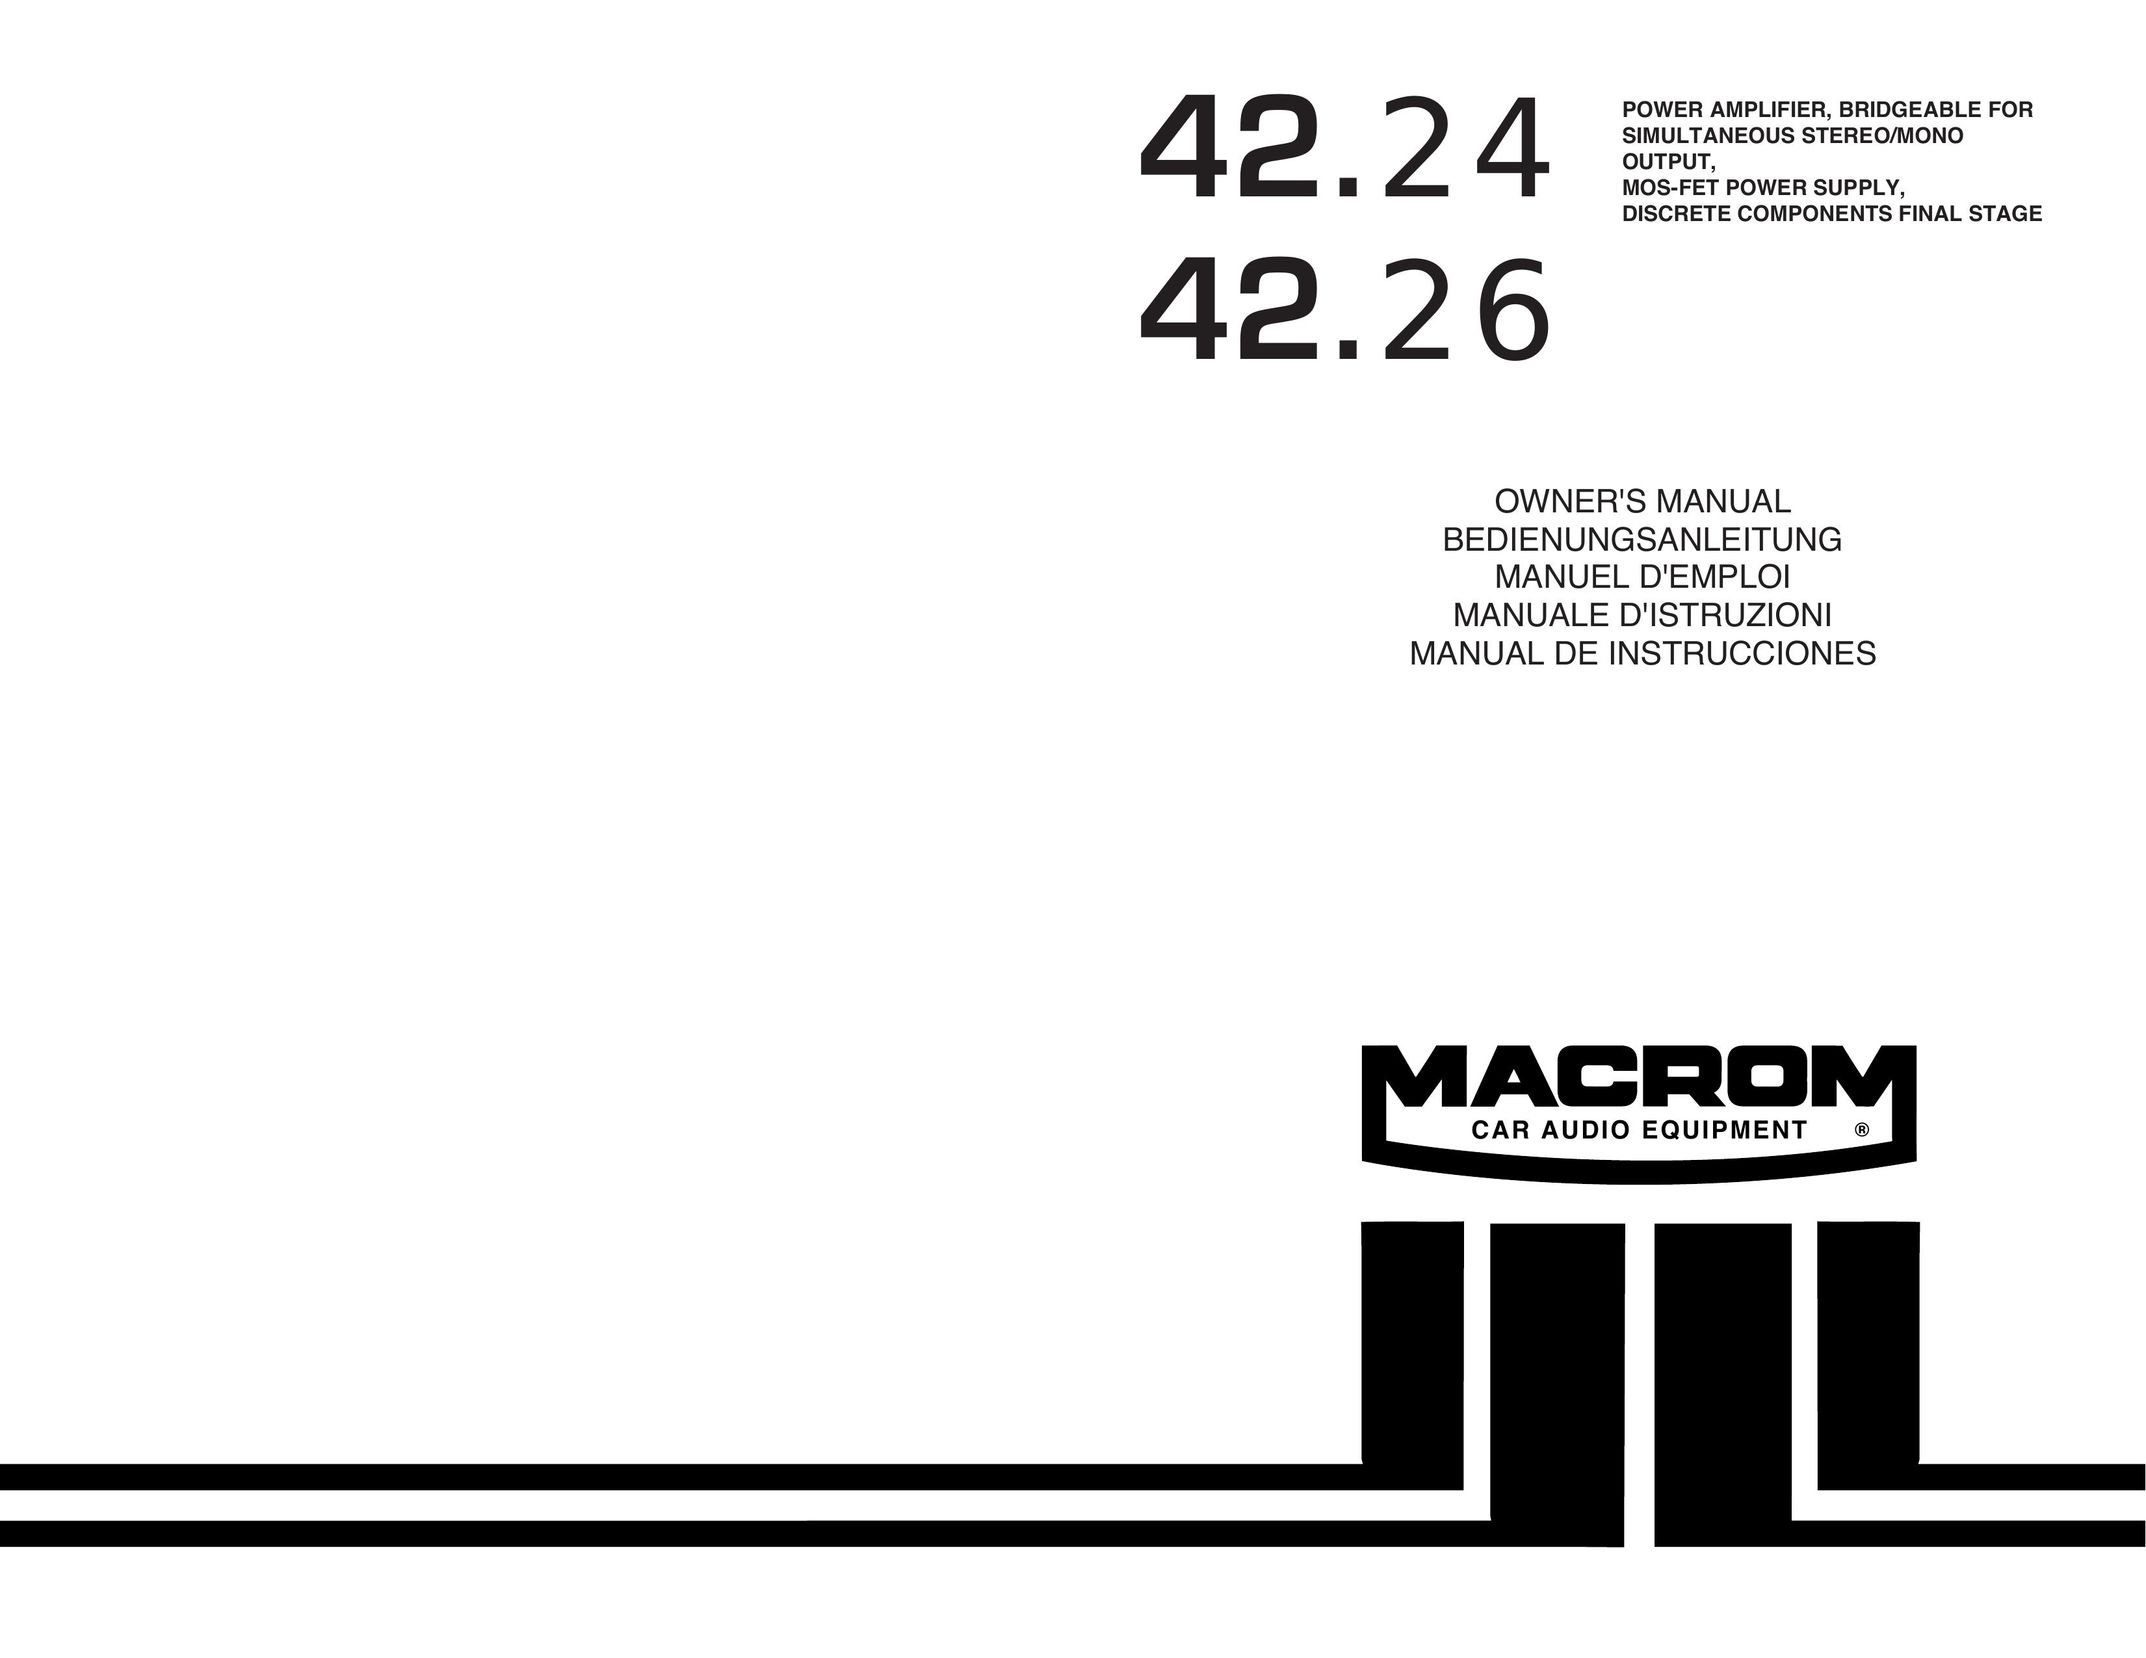 Macrom 42.26 Stereo Amplifier User Manual